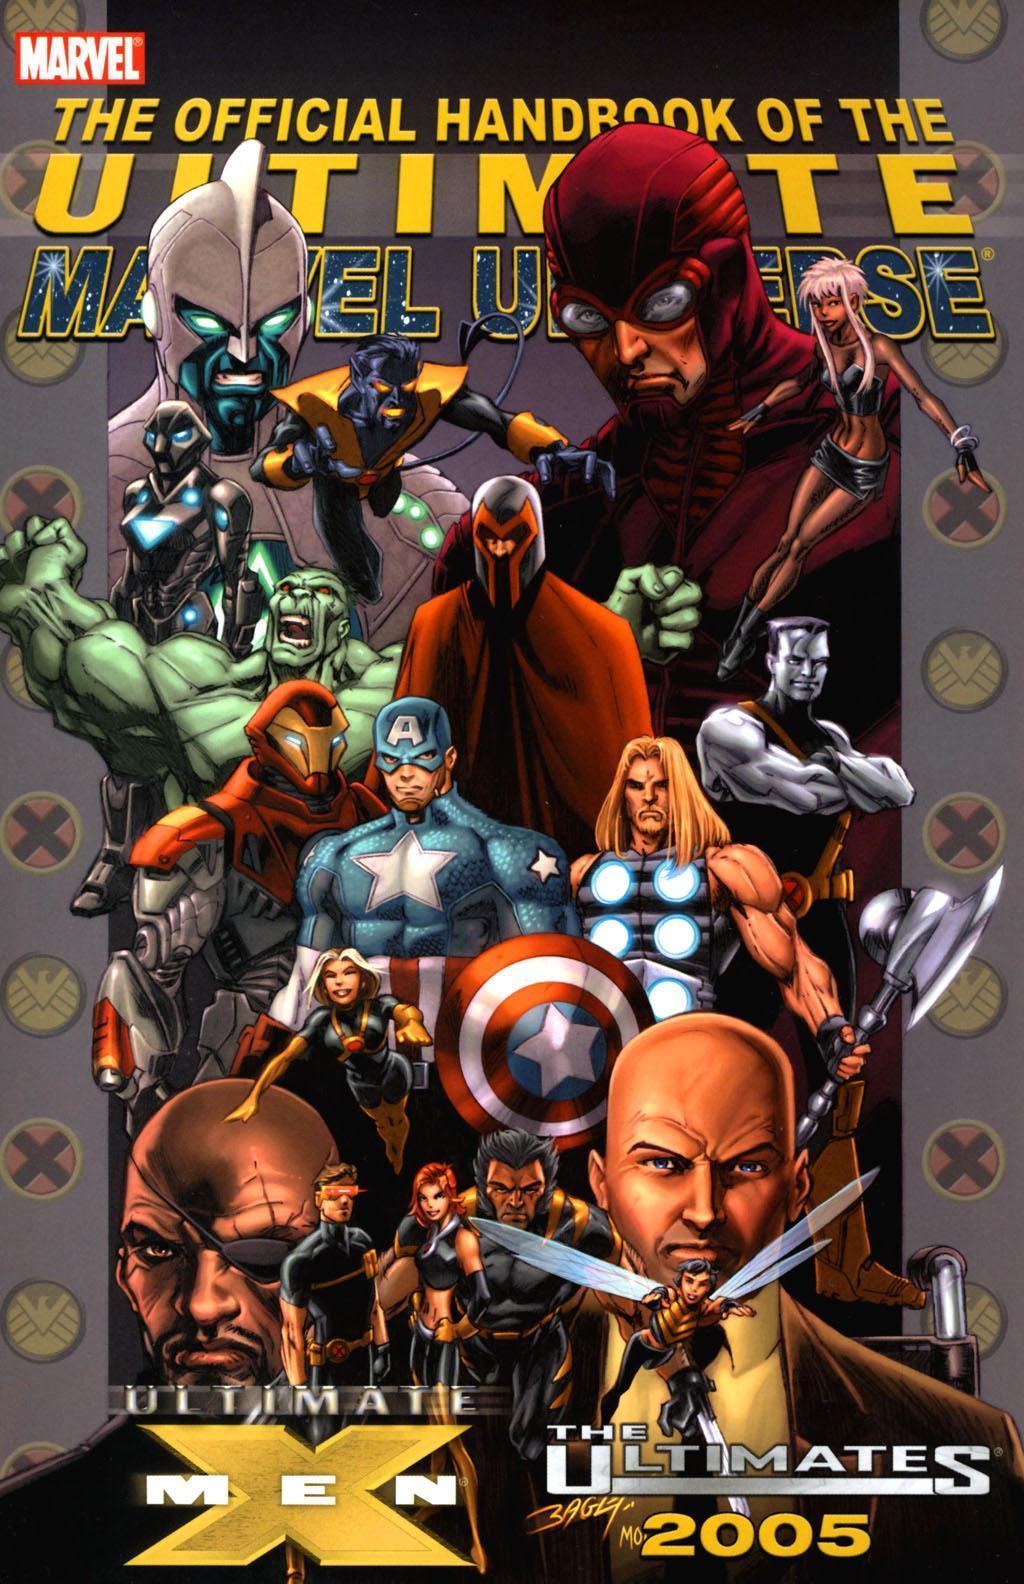 Official Handbook of the Marvel Universe Vol. 4 #20